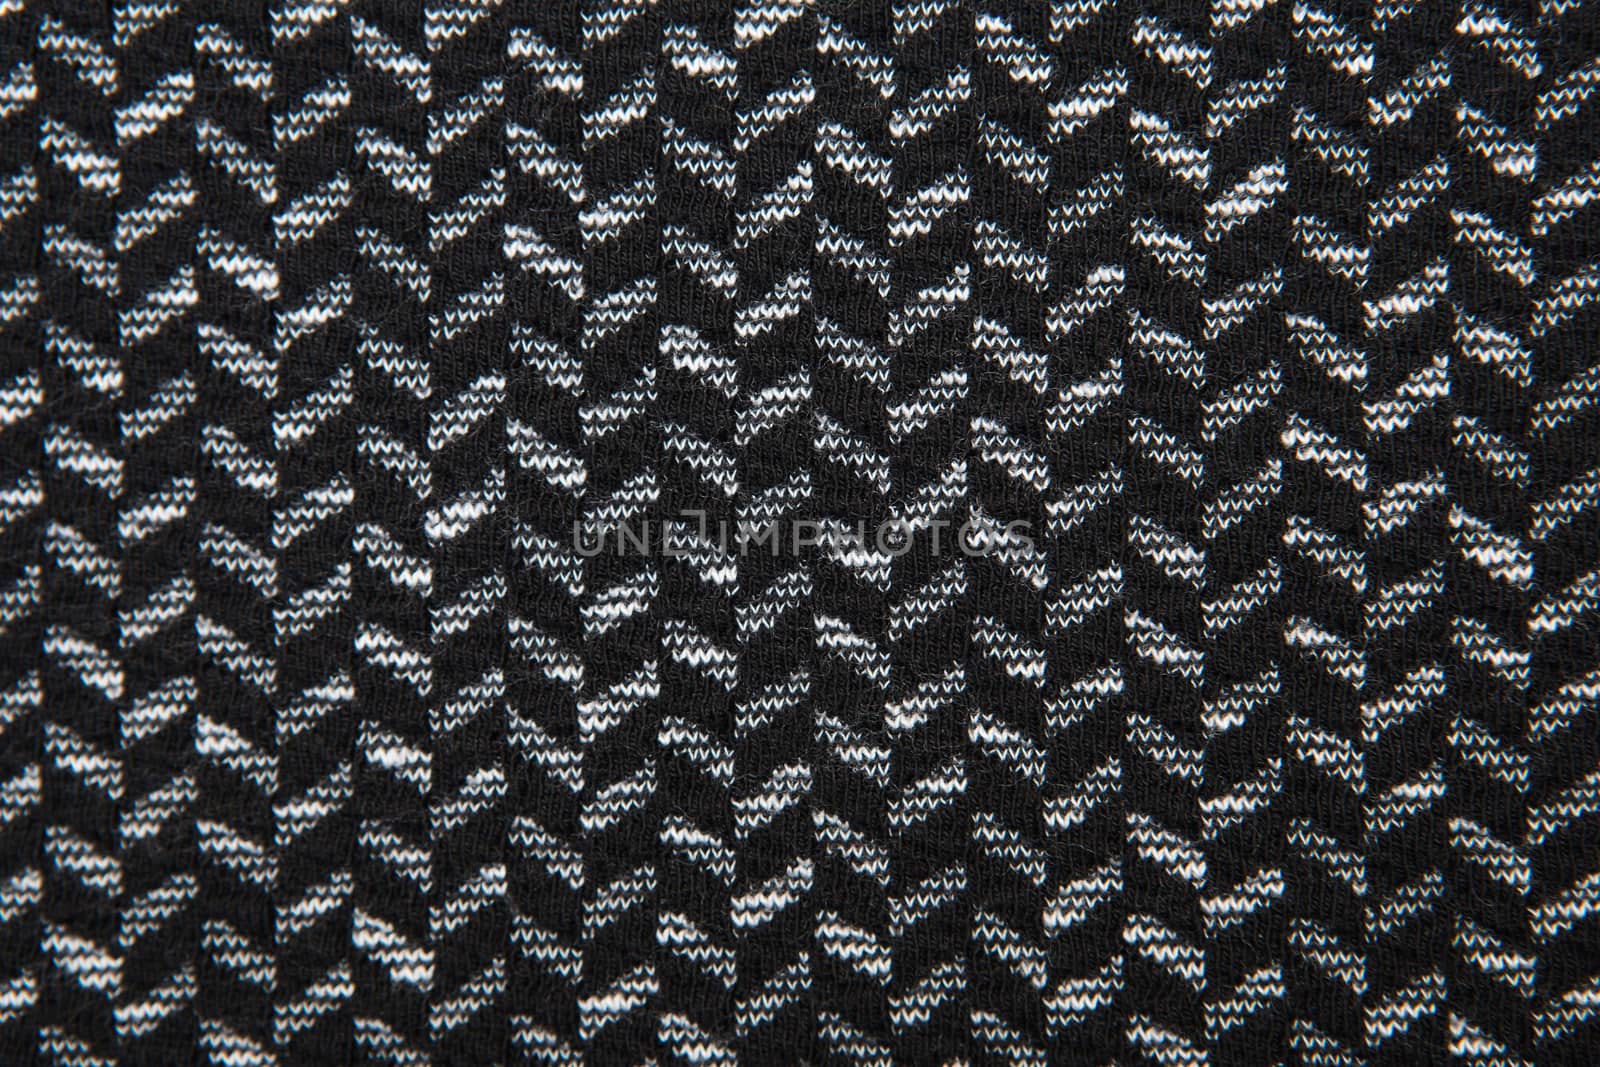 Black and white herringbone fabric pattern texture background closeup